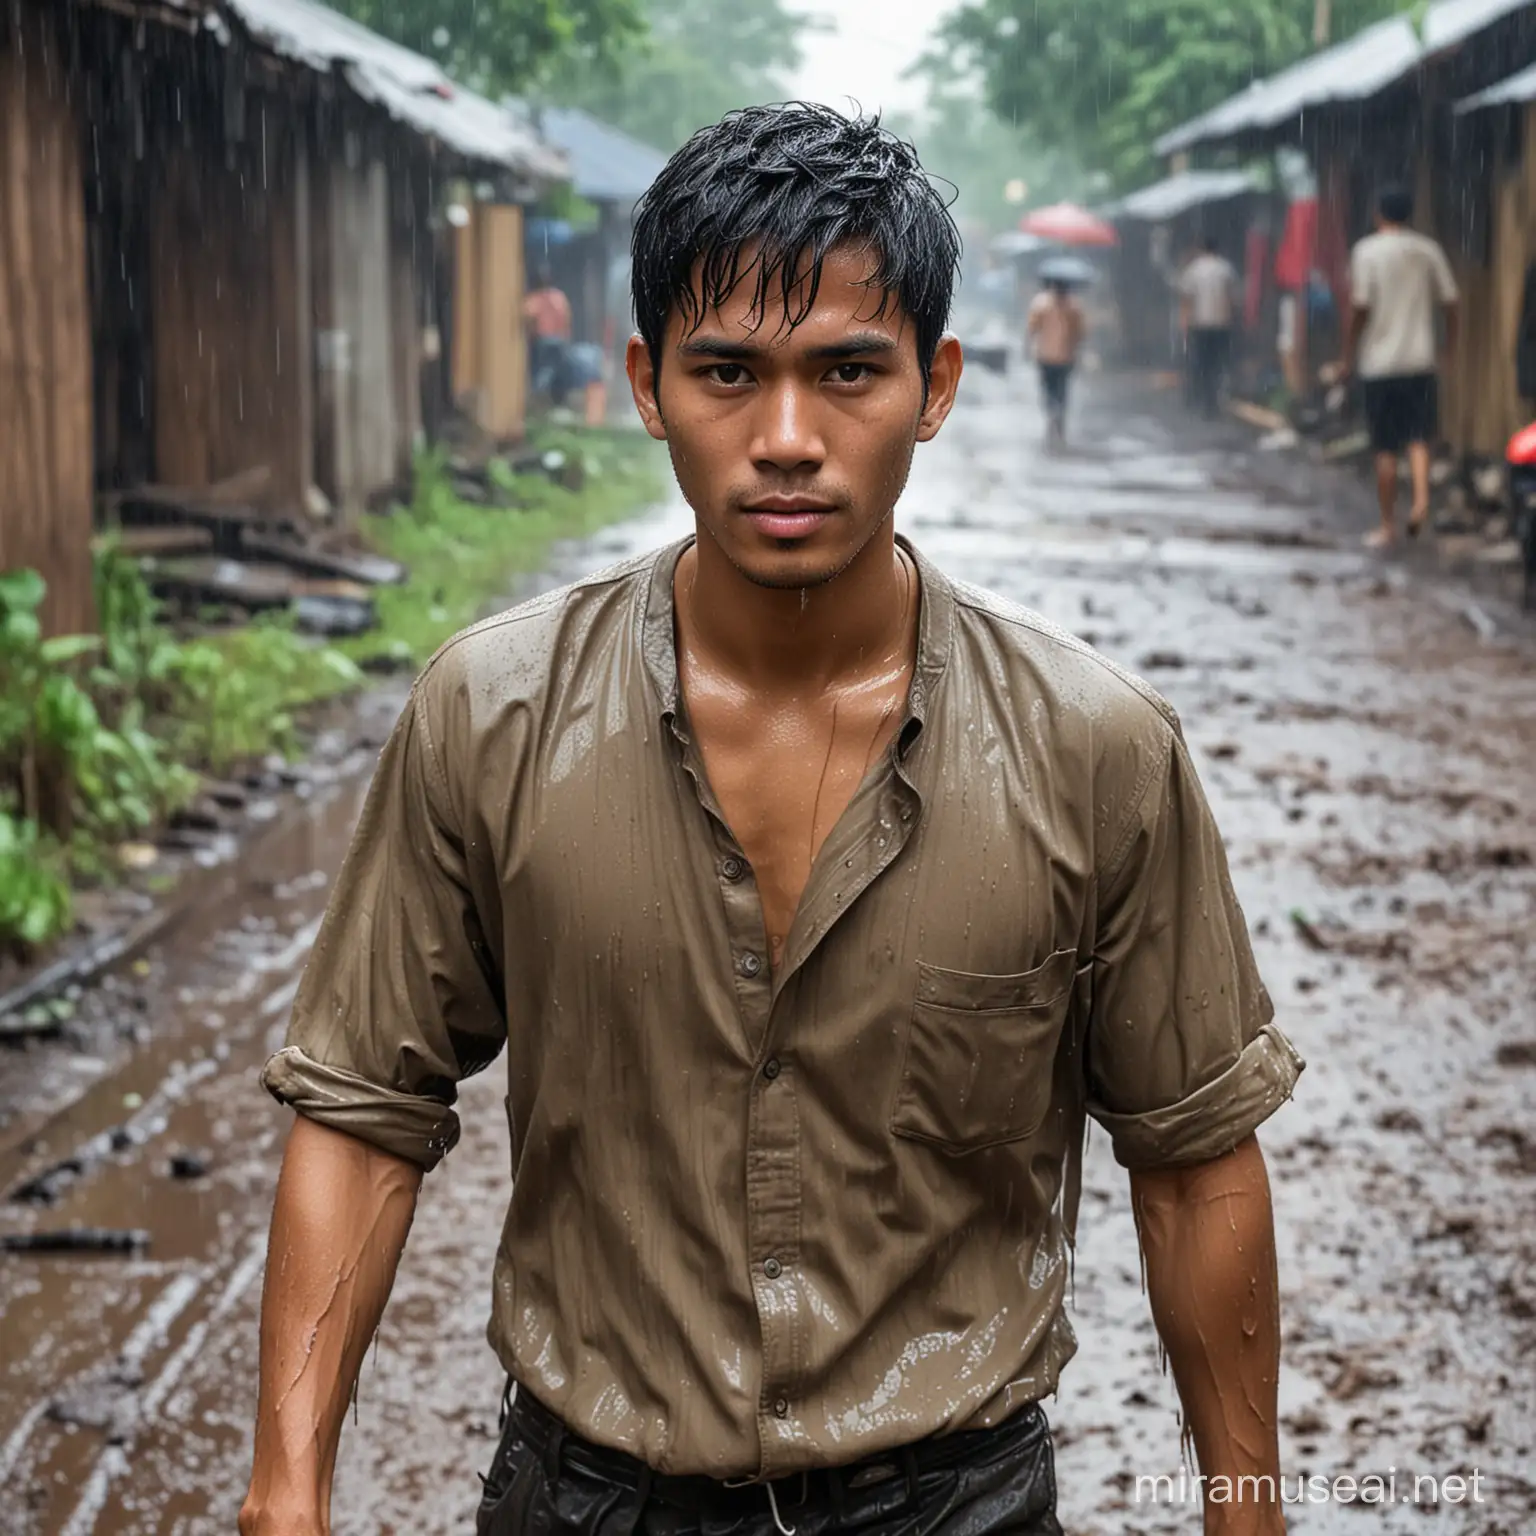 Indonesian Man Walking in Heavy Rain on Muddy Streets